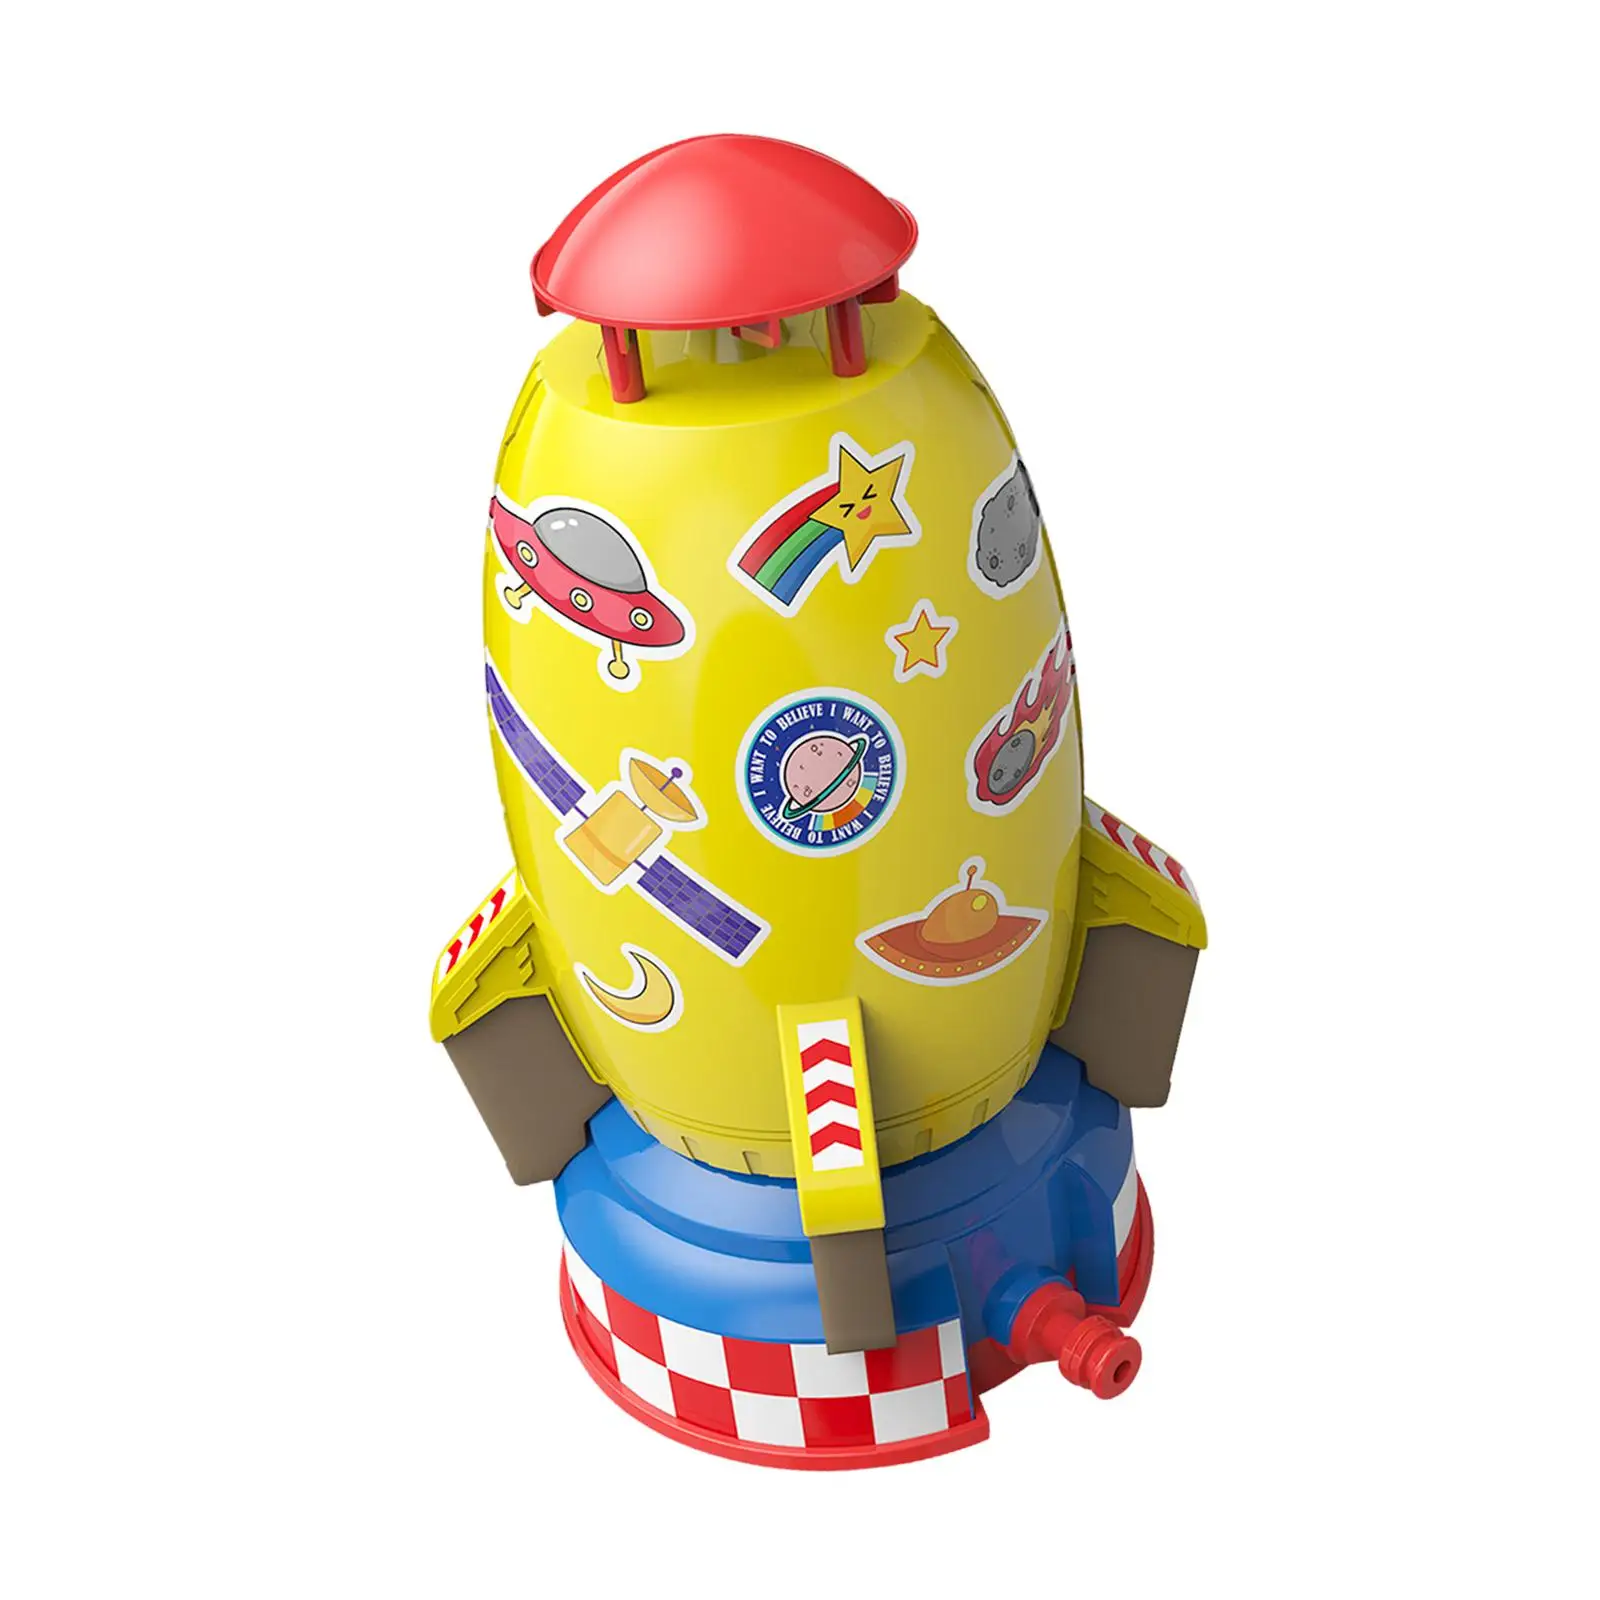 Bathtub game toy rocket Shaped Rotating Water Spray Toy for Girls Boys Children